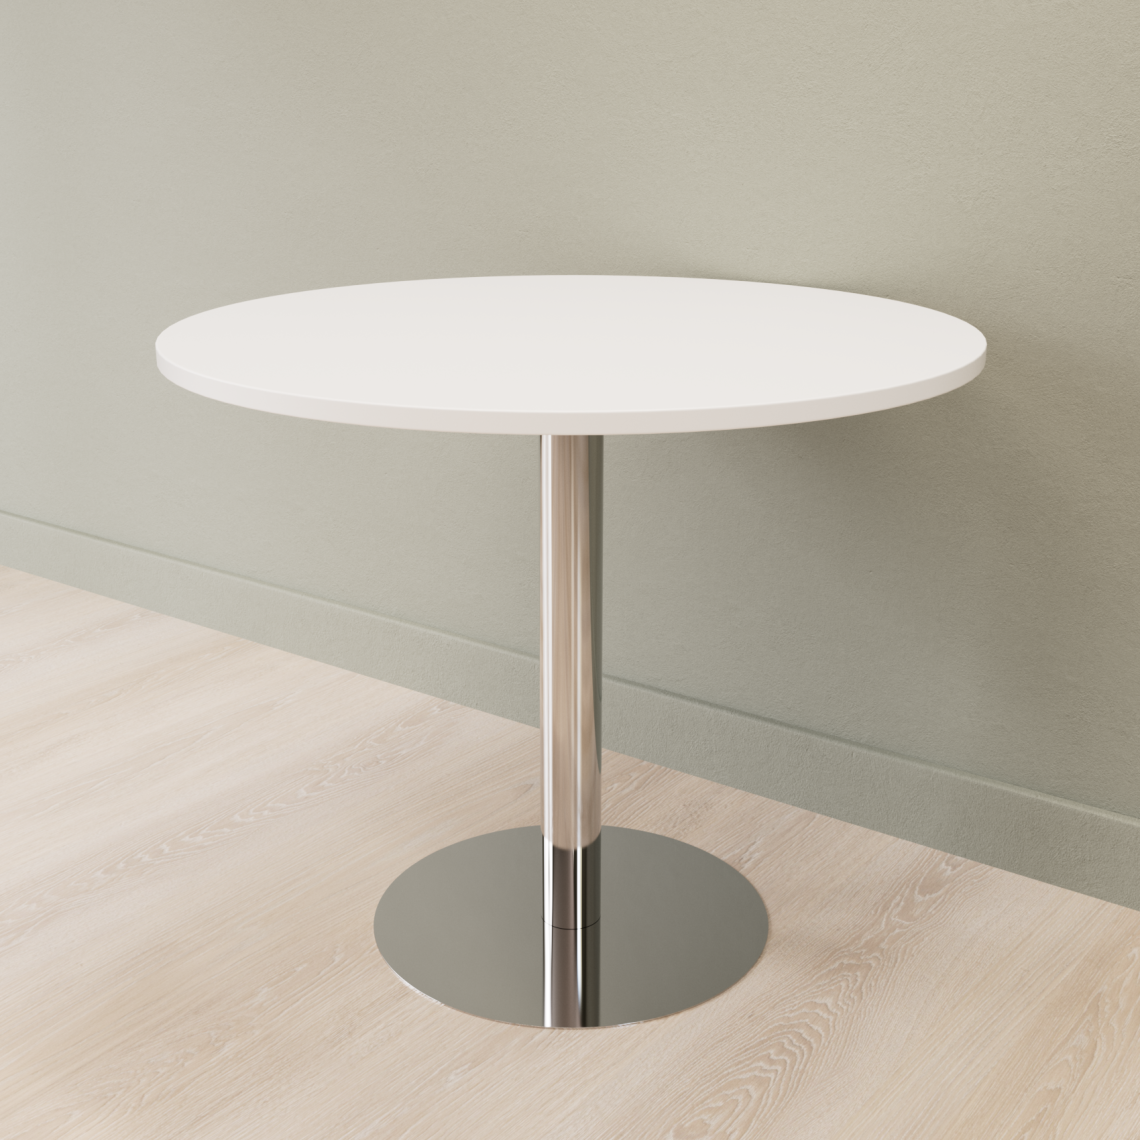 Cafébord Rundt, Størrelse Ø70 cm, Bordplade Hvid, Stativ Krom